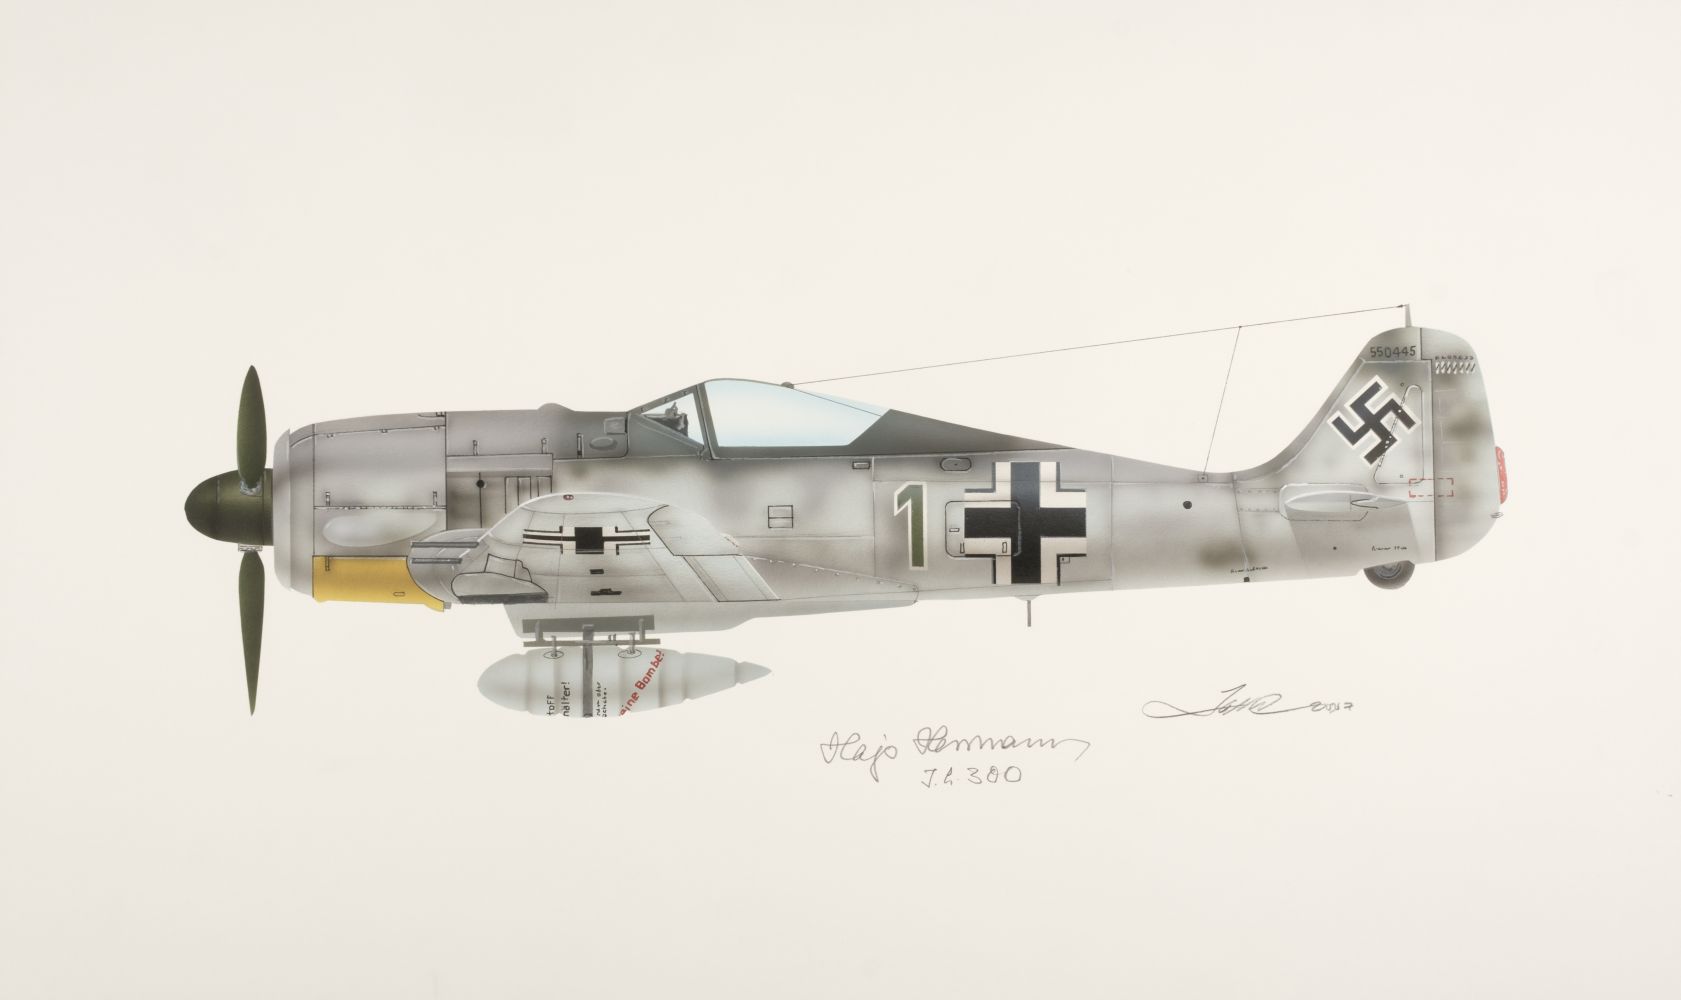 * Valo (John C., circa 1963). Focke Wulf Fw-190A-6